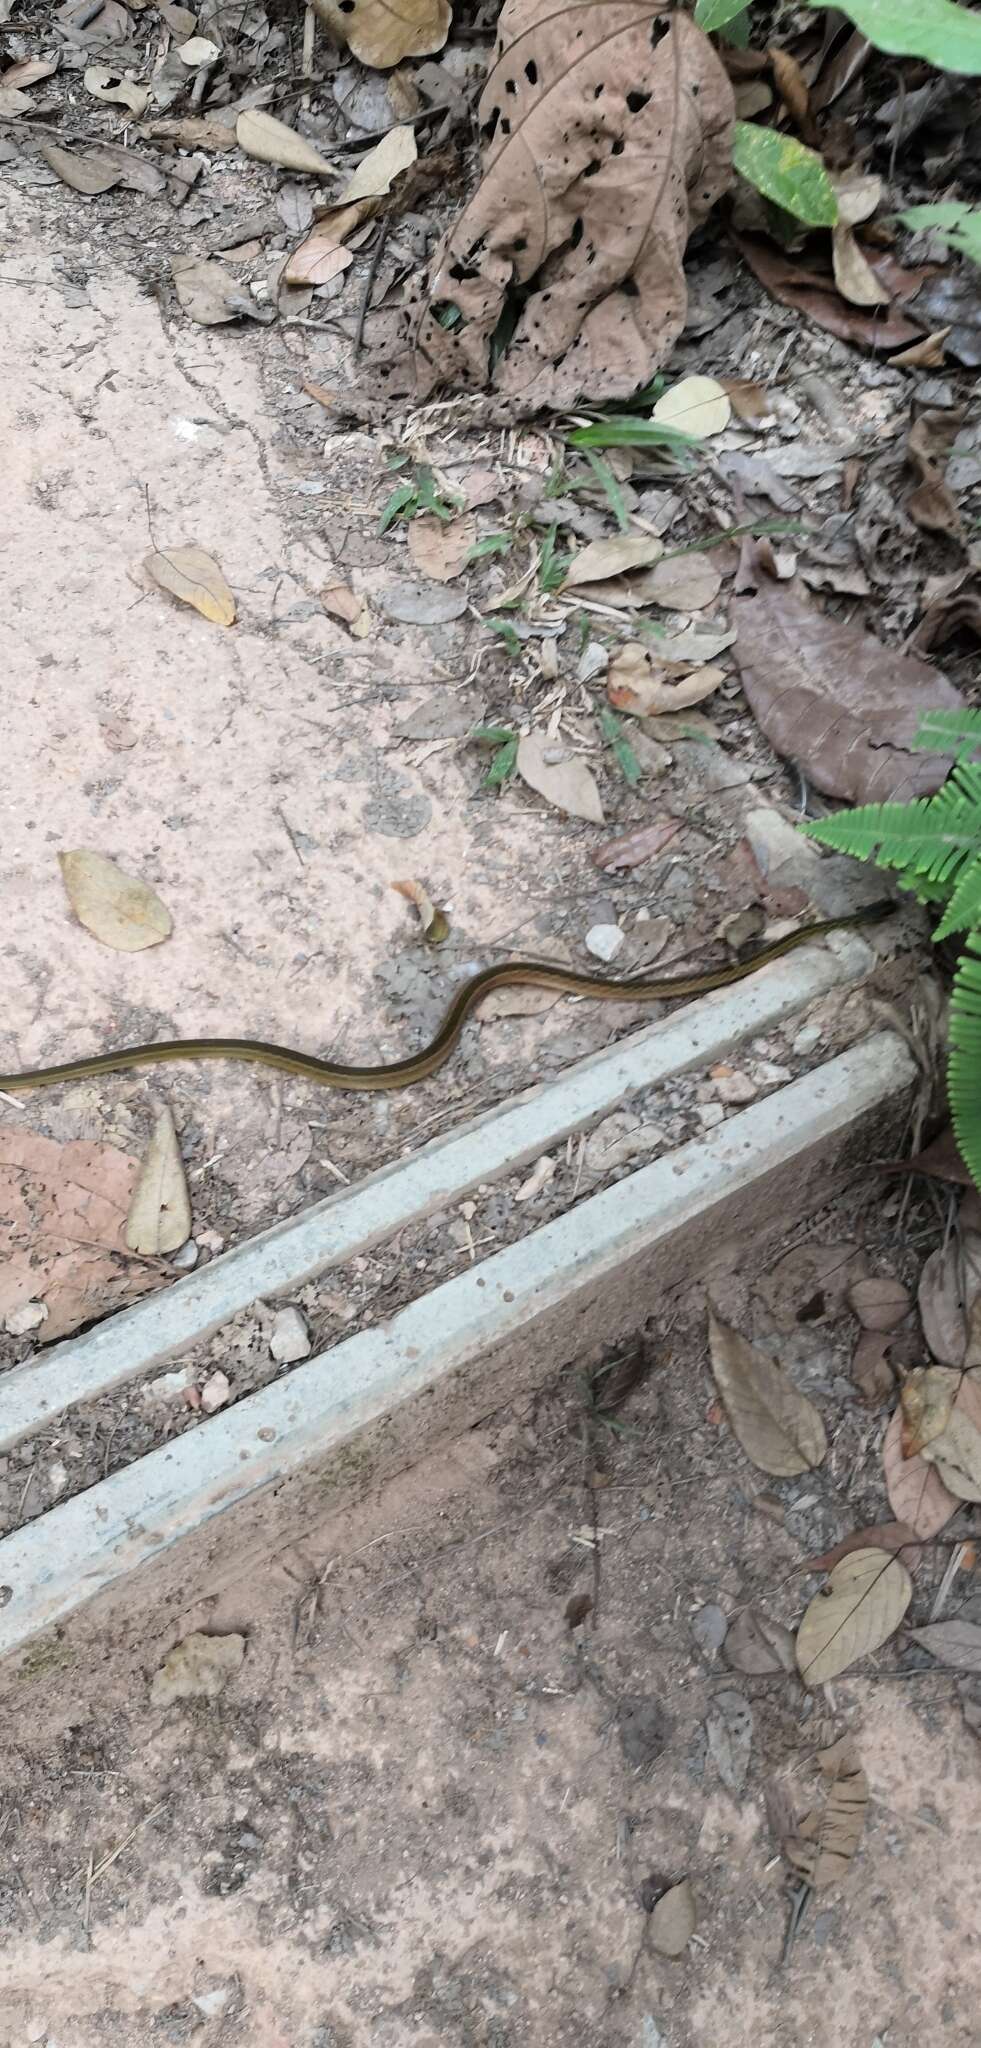 Image of Malayan Spotted Keelback Water Snake